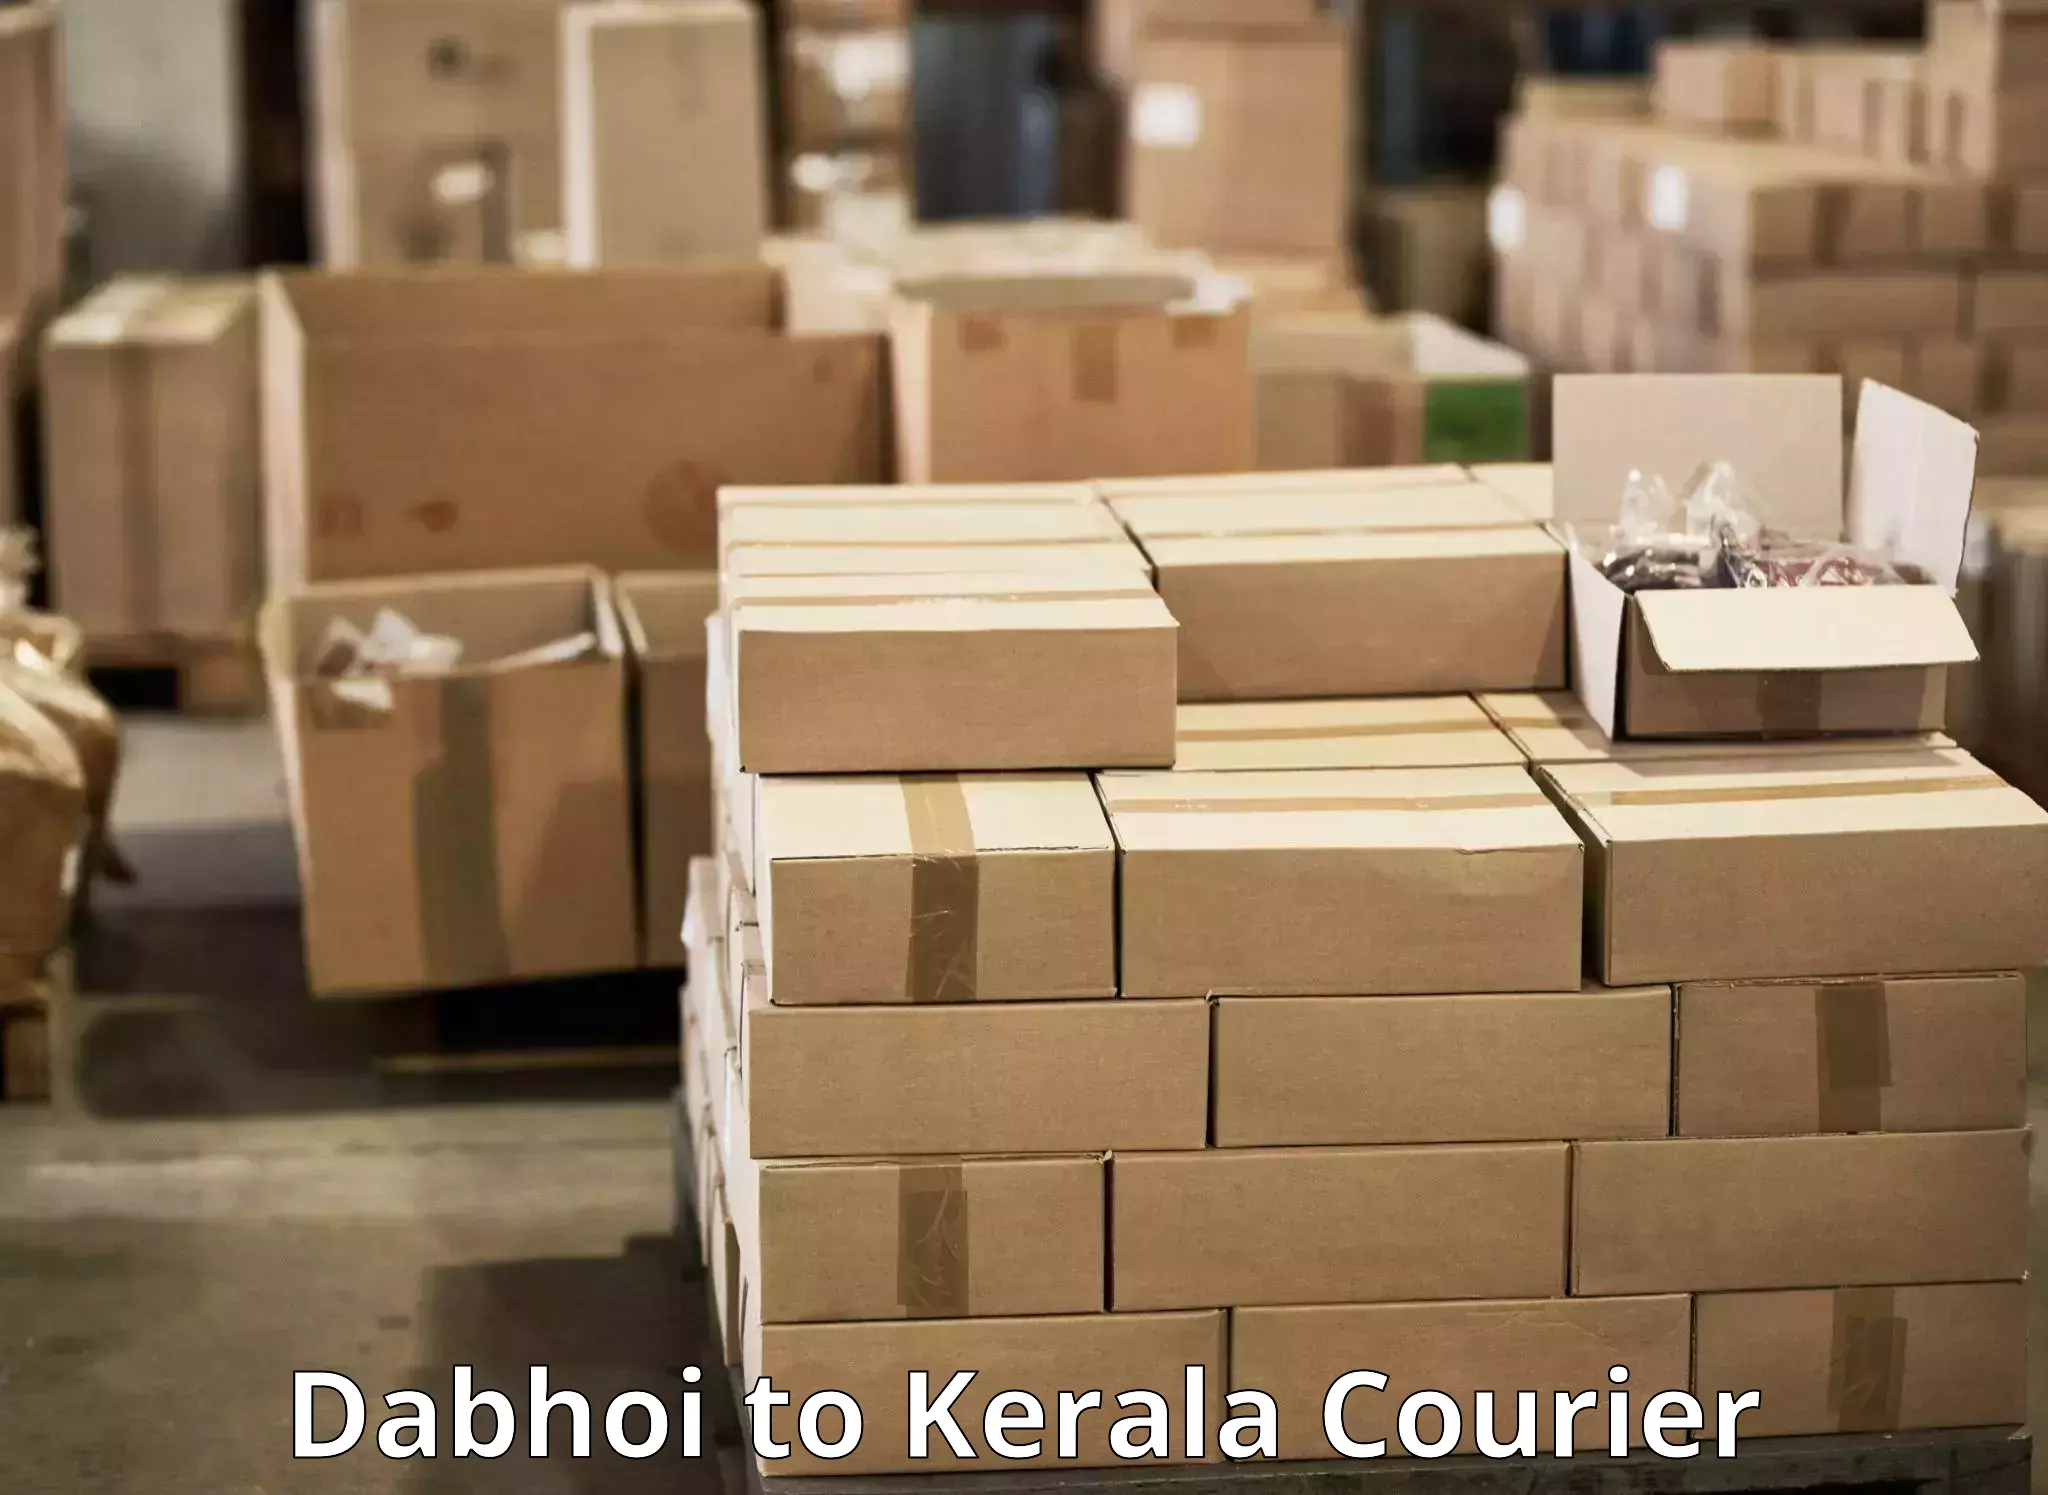 24-hour courier service Dabhoi to Cochin Port Kochi